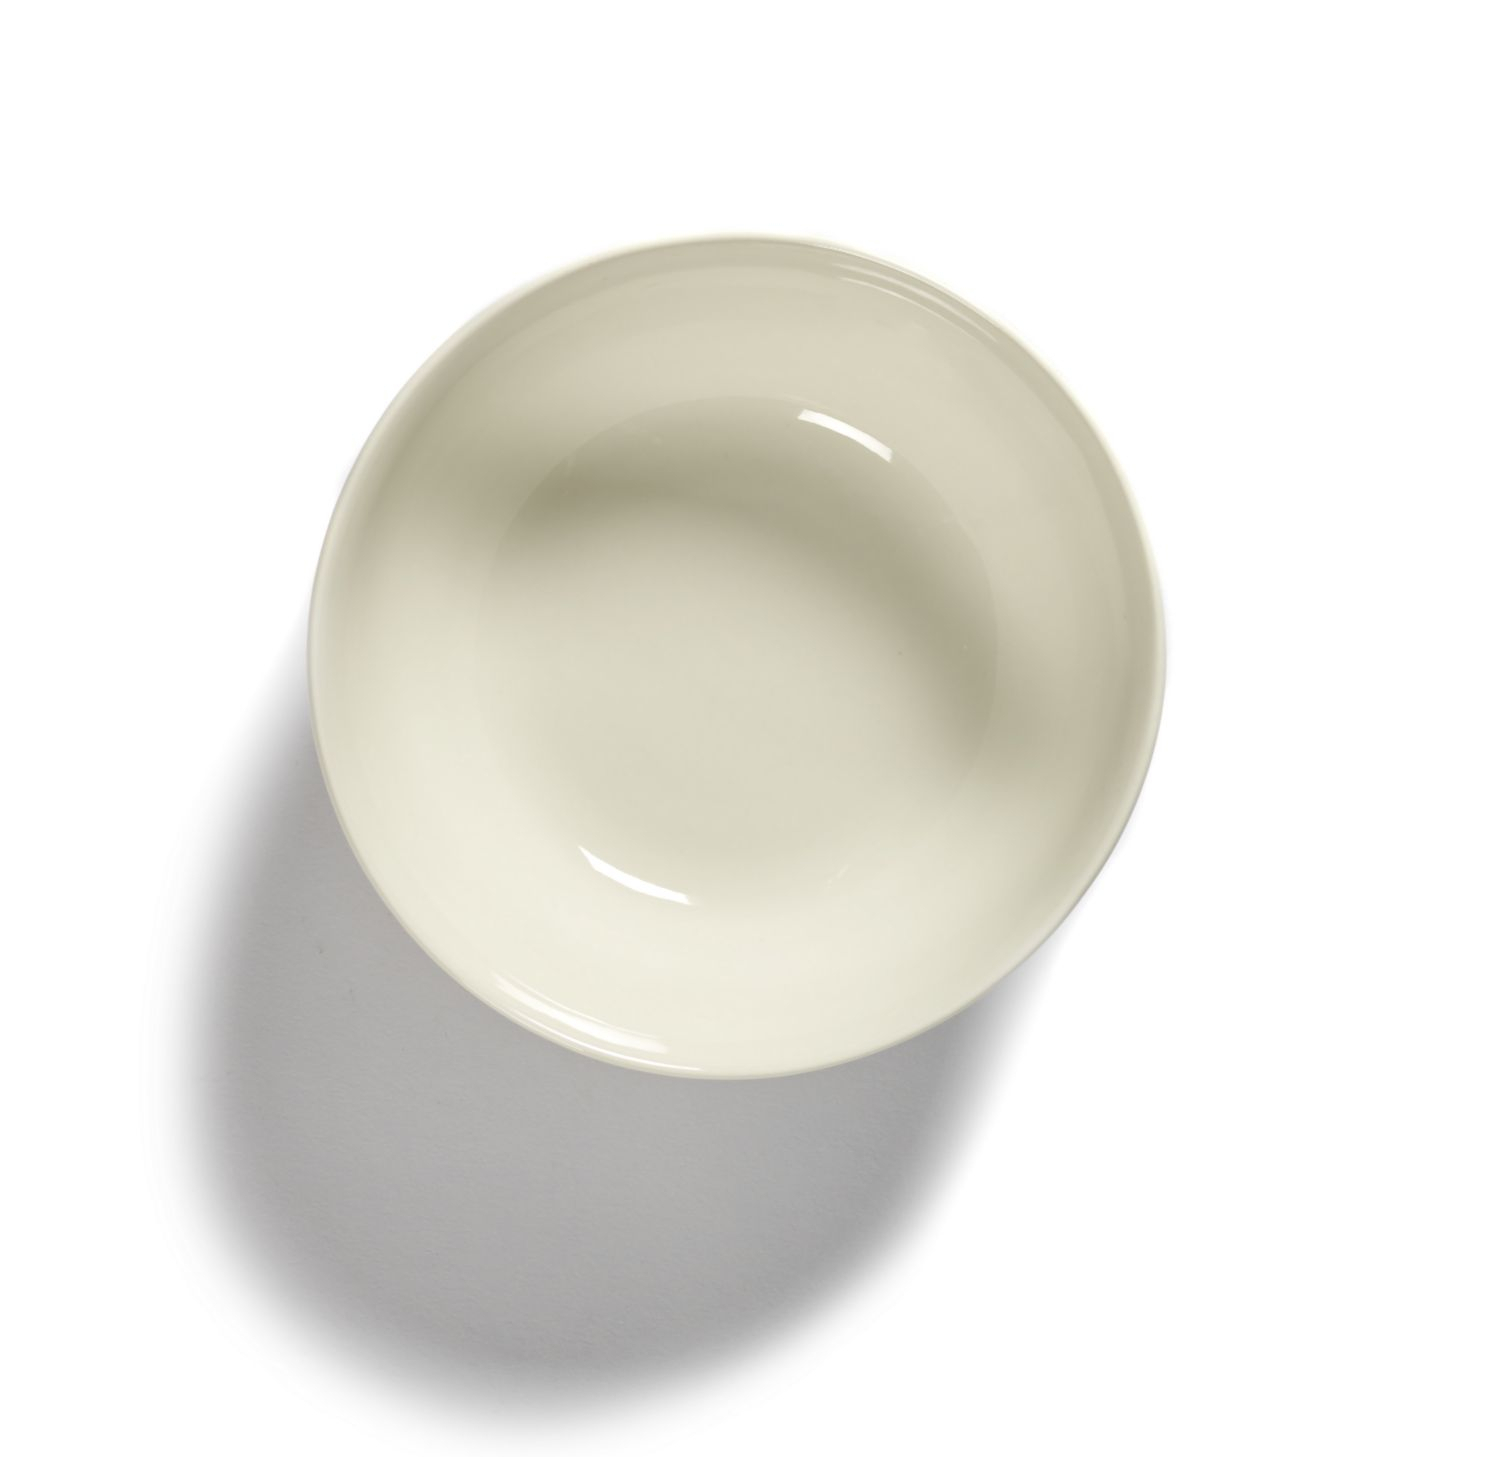 4x Feast Schüssel Groß Keramik Weiß 1